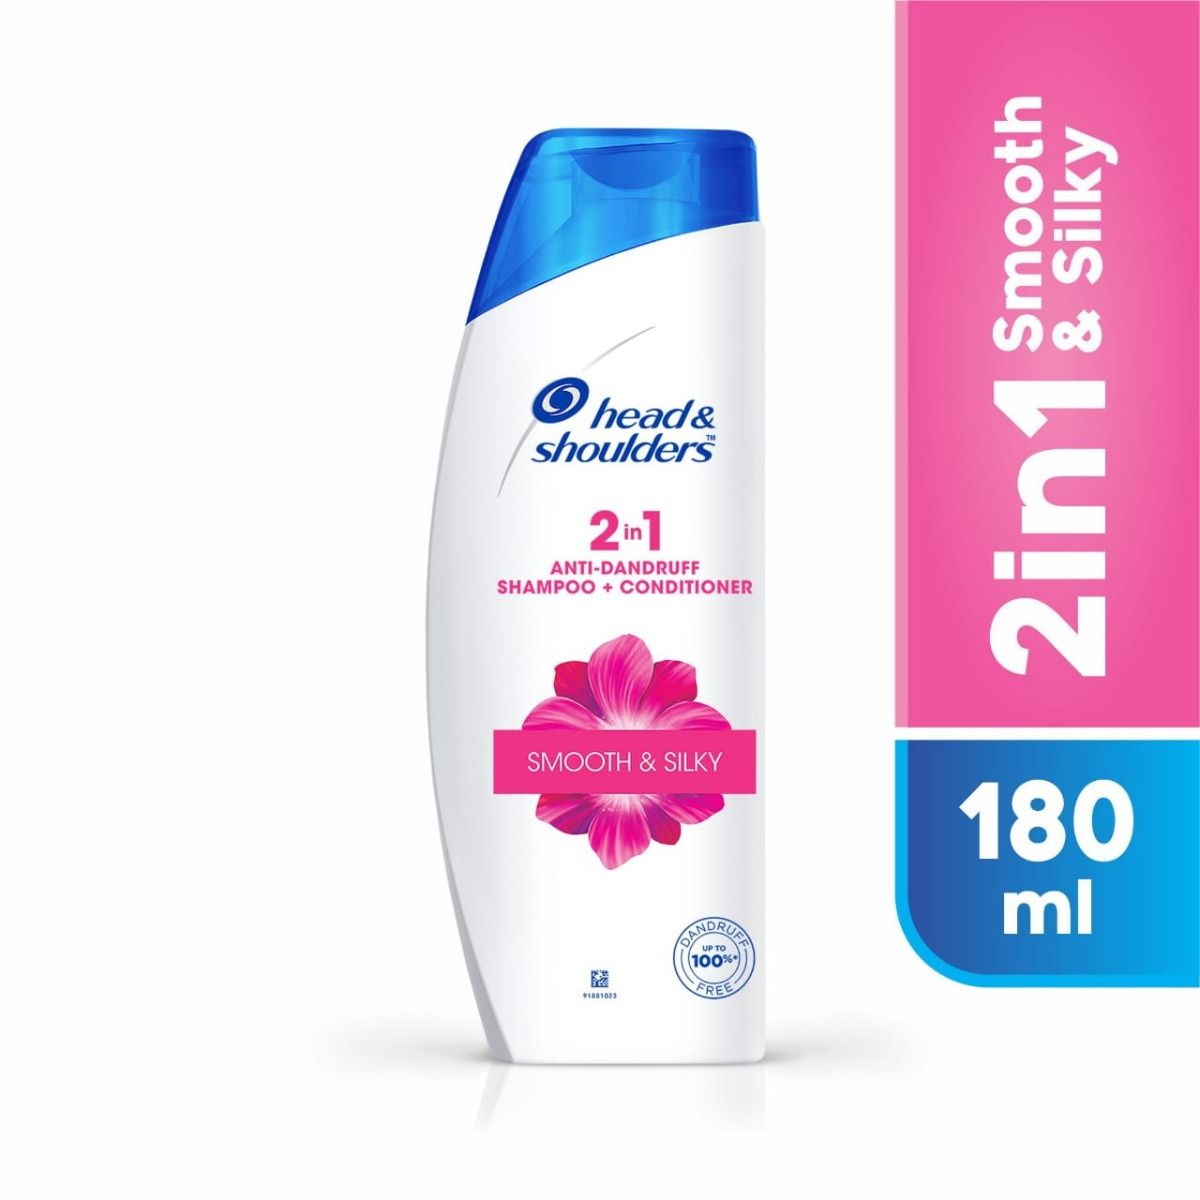 Buy Head & Shoulders 2 in 1 Smooth & Silky Anti-Dandruff Shampoo + Conditioner, 180 ml Online